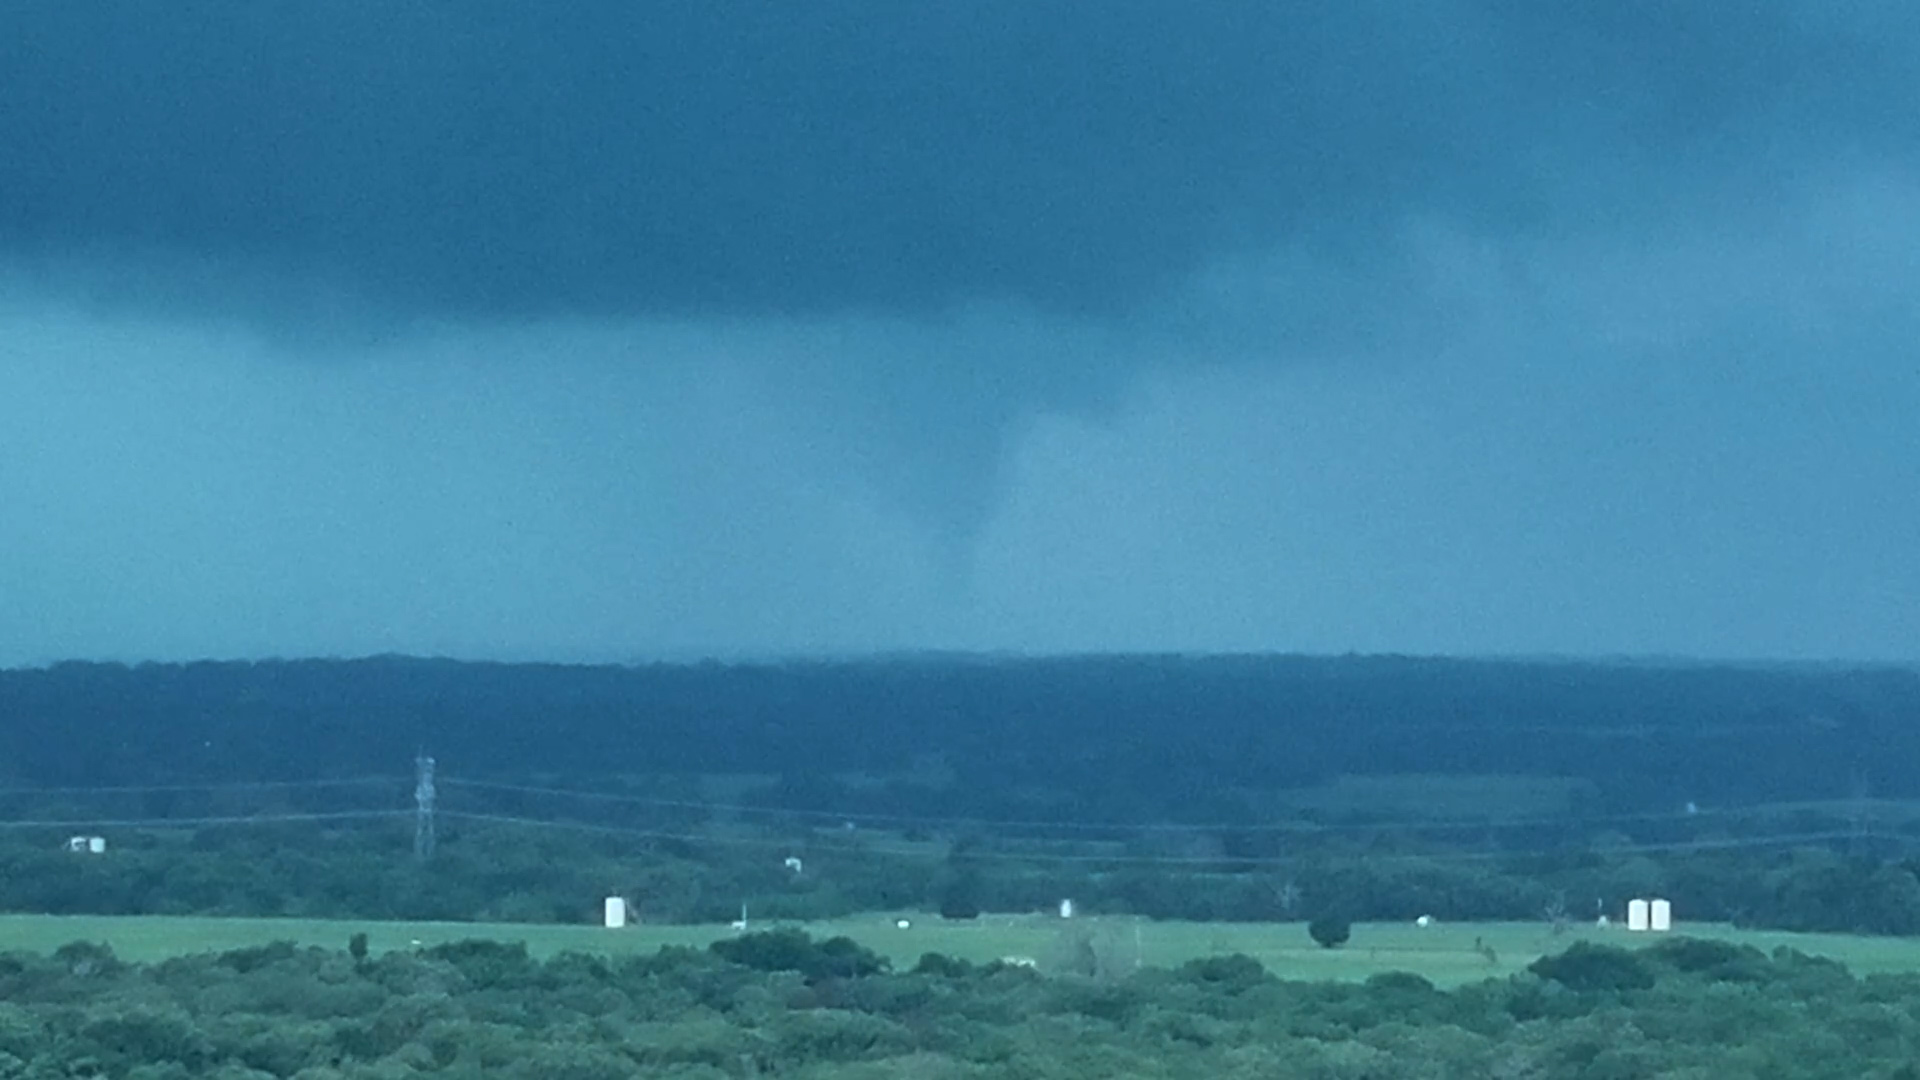 Drone image reveals tornado in the horizon over Groveton, Texas.